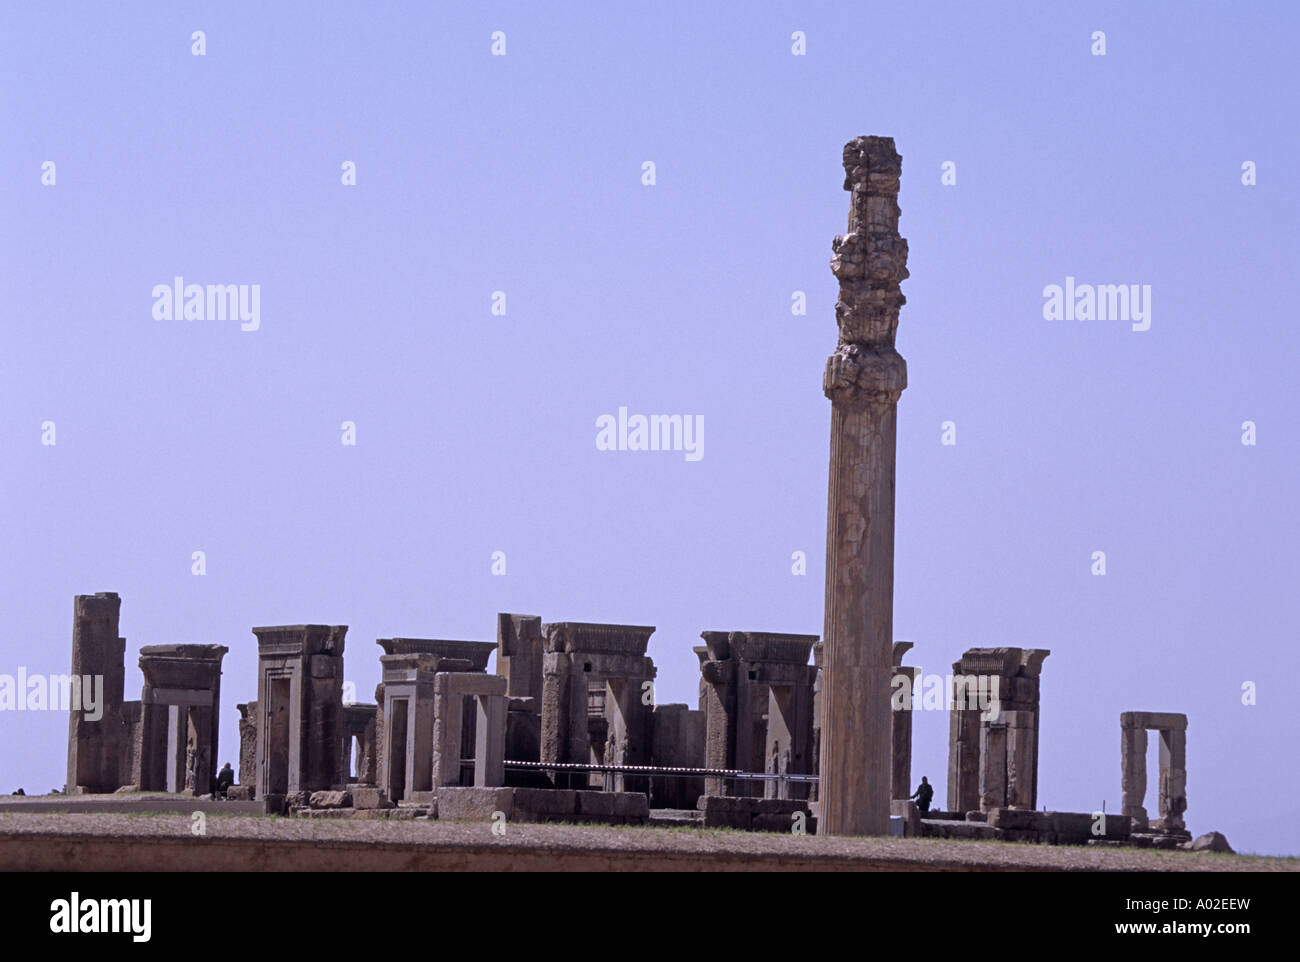 Huge pillars at Persepolis, ancient capital city of the Persian Empire, Iran Stock Photo